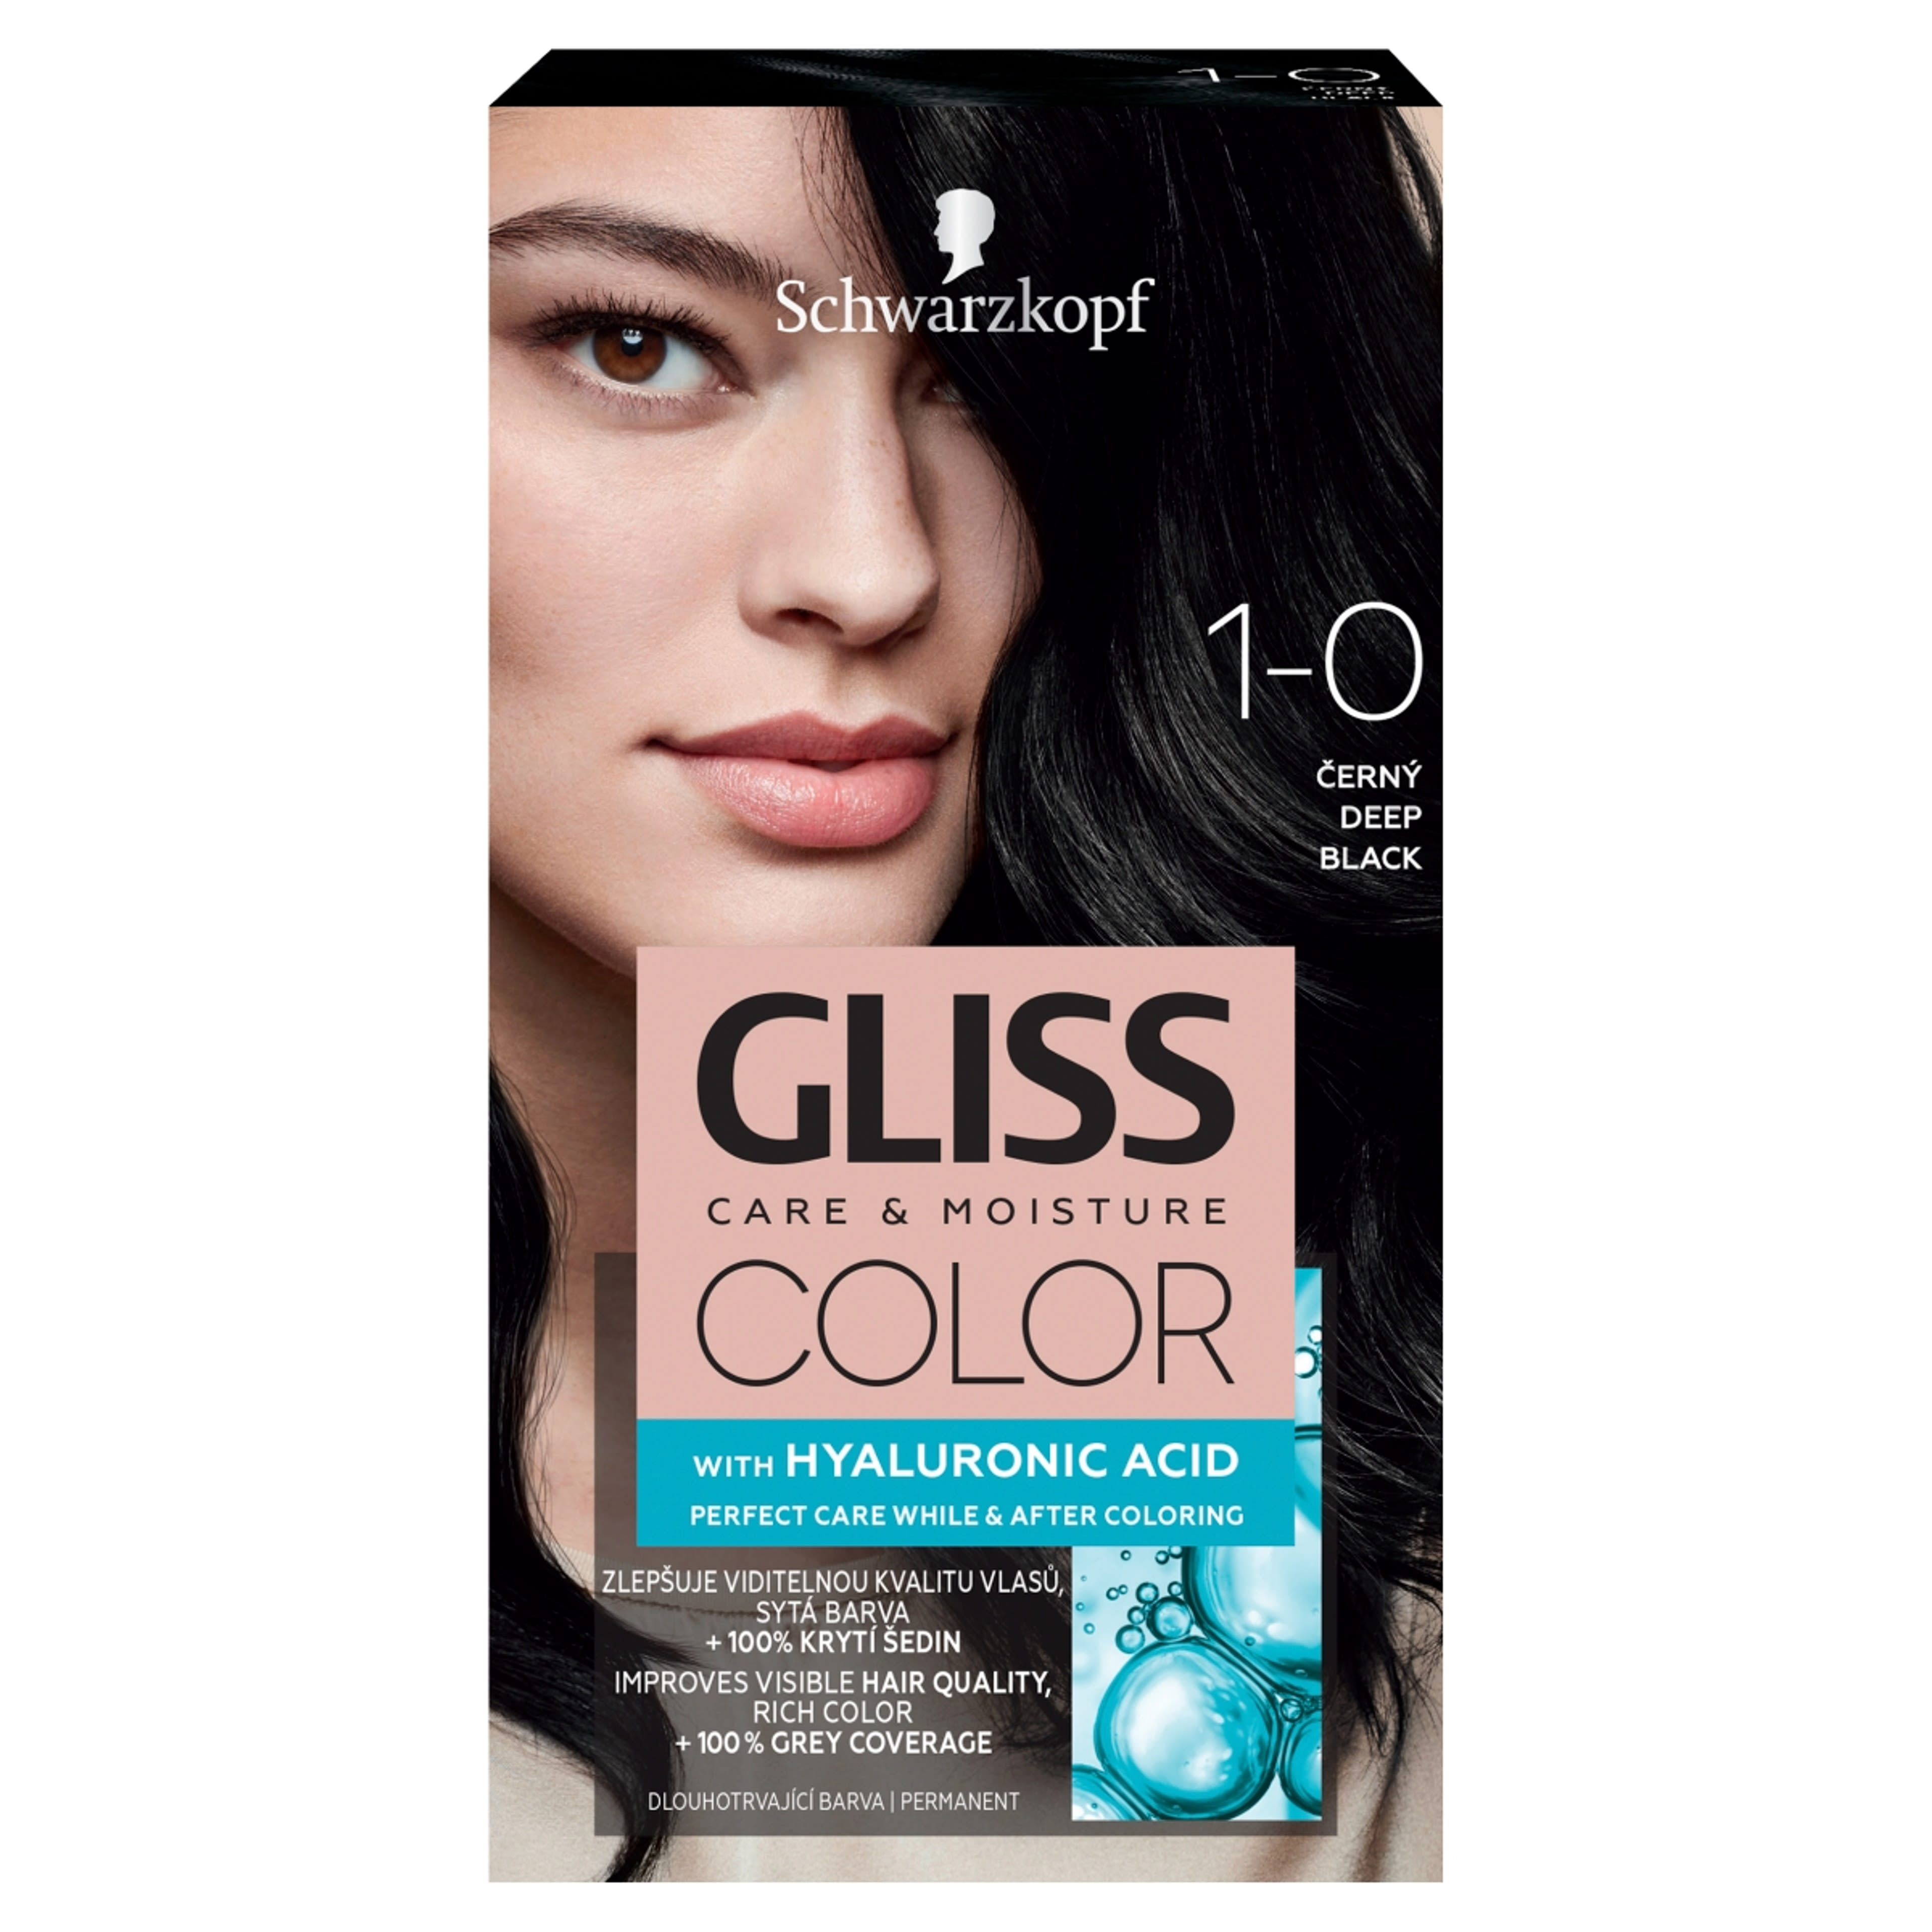 Gliss Color tartós hajfesték 1-0 Sötét fekete - 1 db